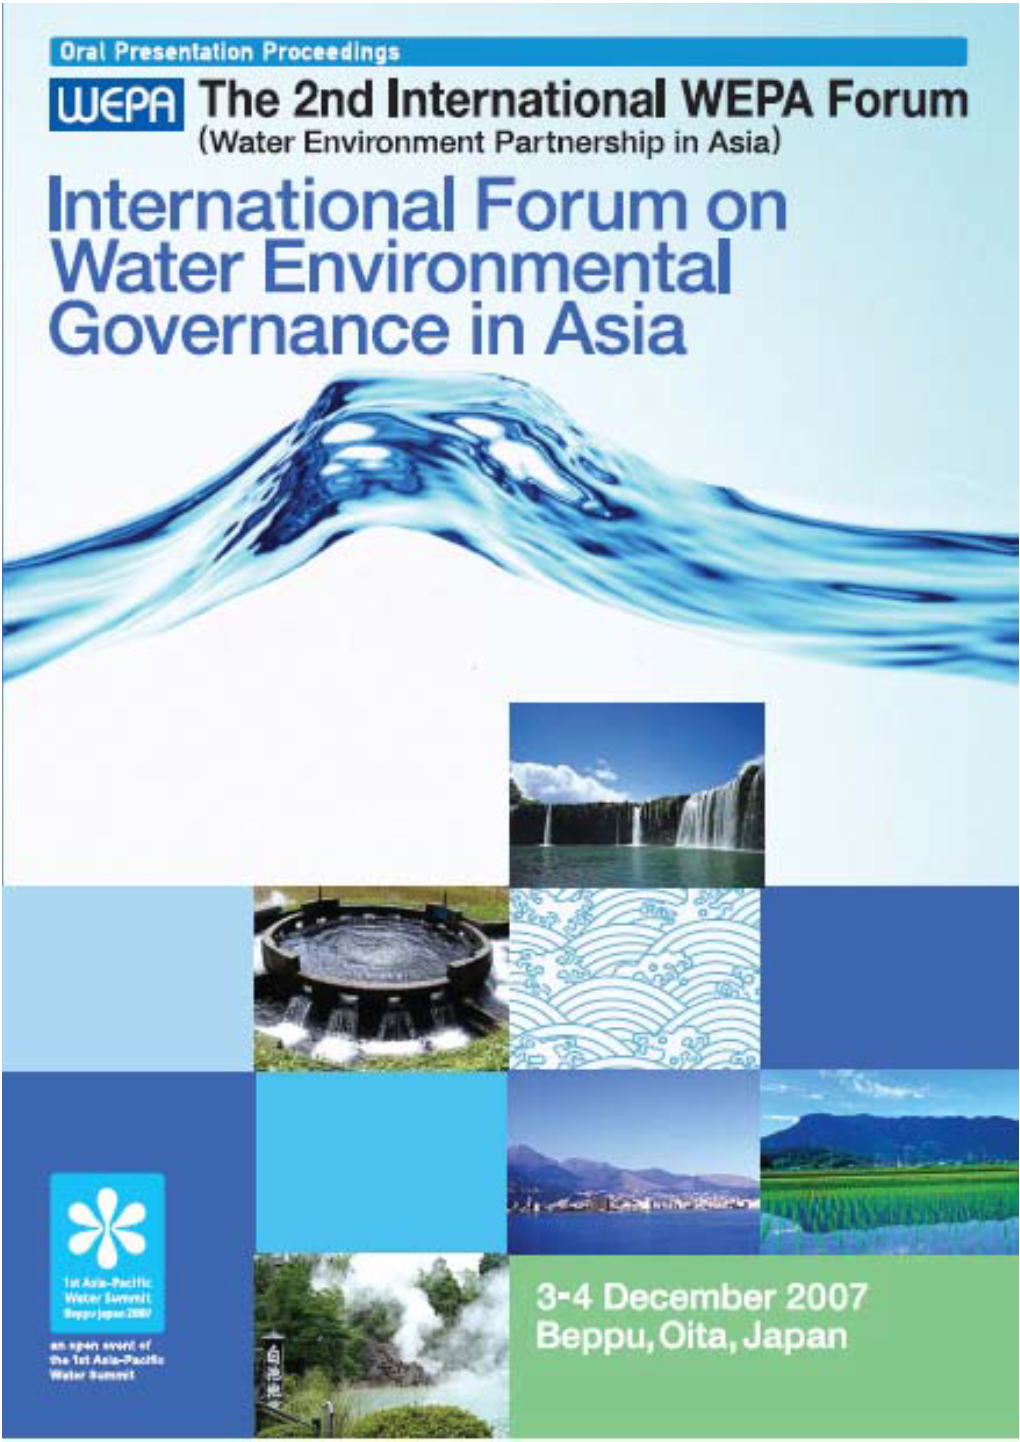 The 2Nd WEPA International Forum Proceedings 2007